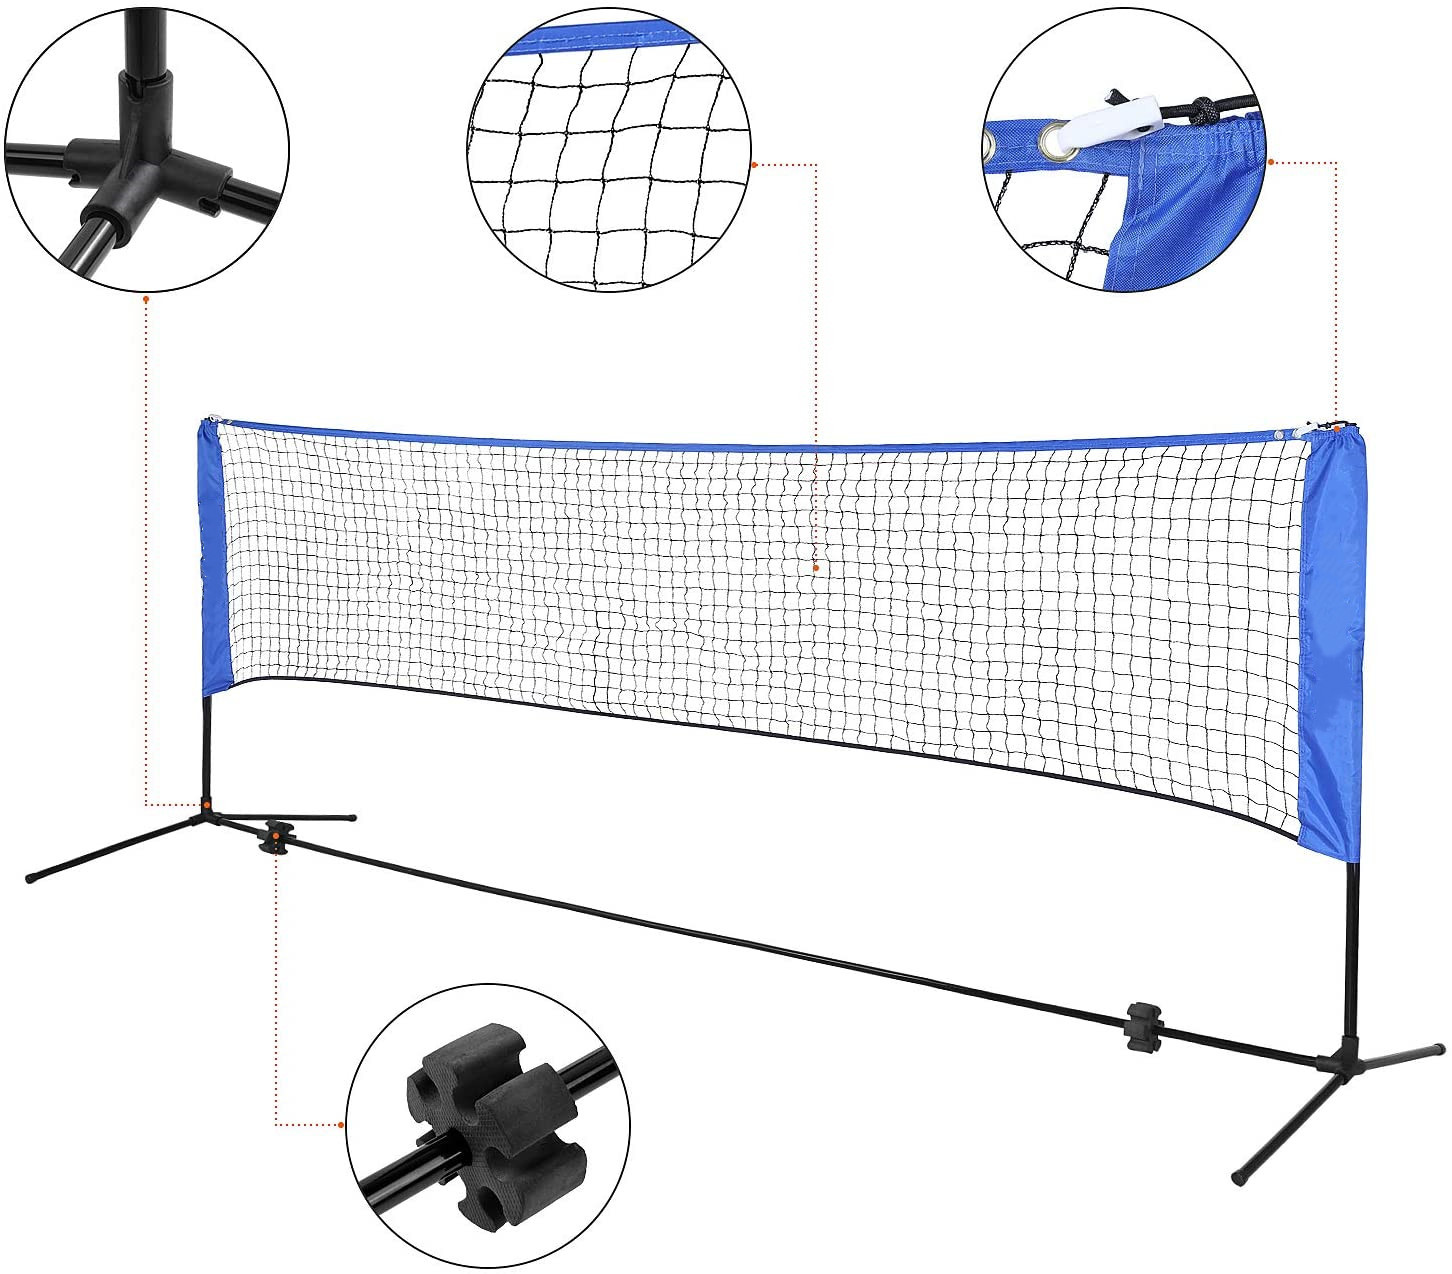 Portable Badminton Tennis Net ，Volleyball, Beach Ball